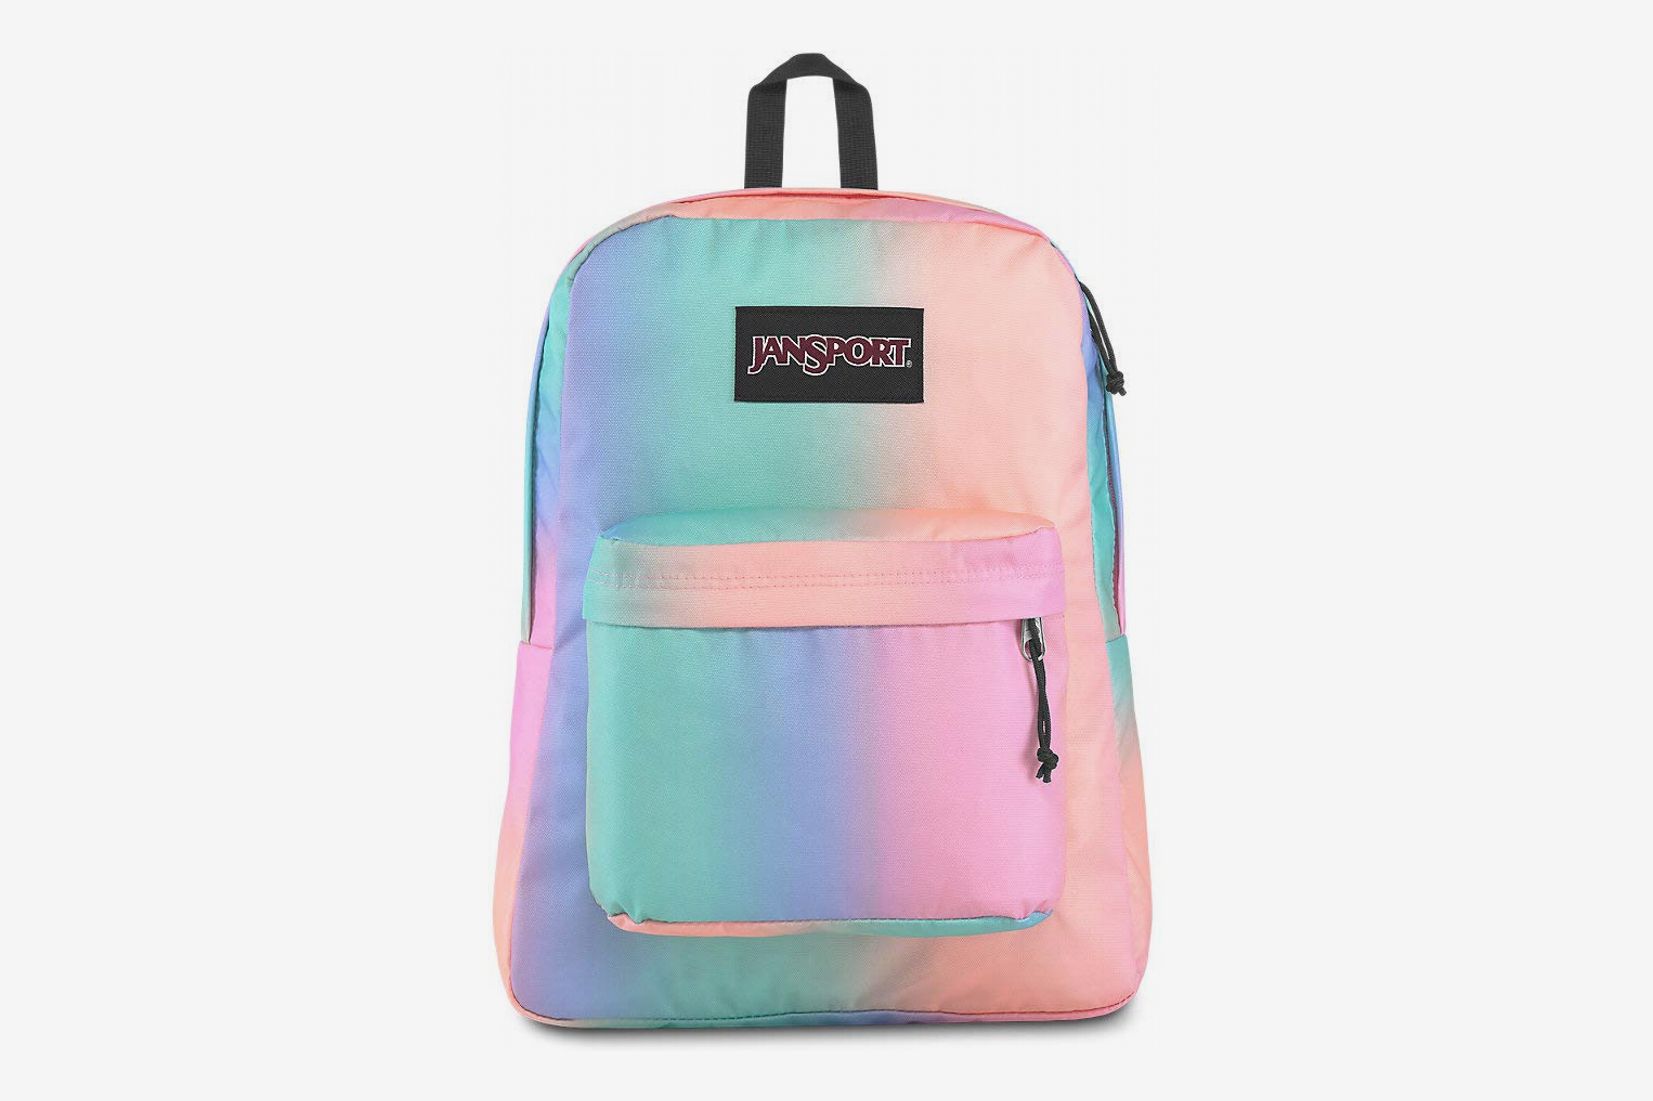 Backpack Hot Pink Ice Cream Cute Funny Cartoon Laptop Travel School College Backpacks Bag